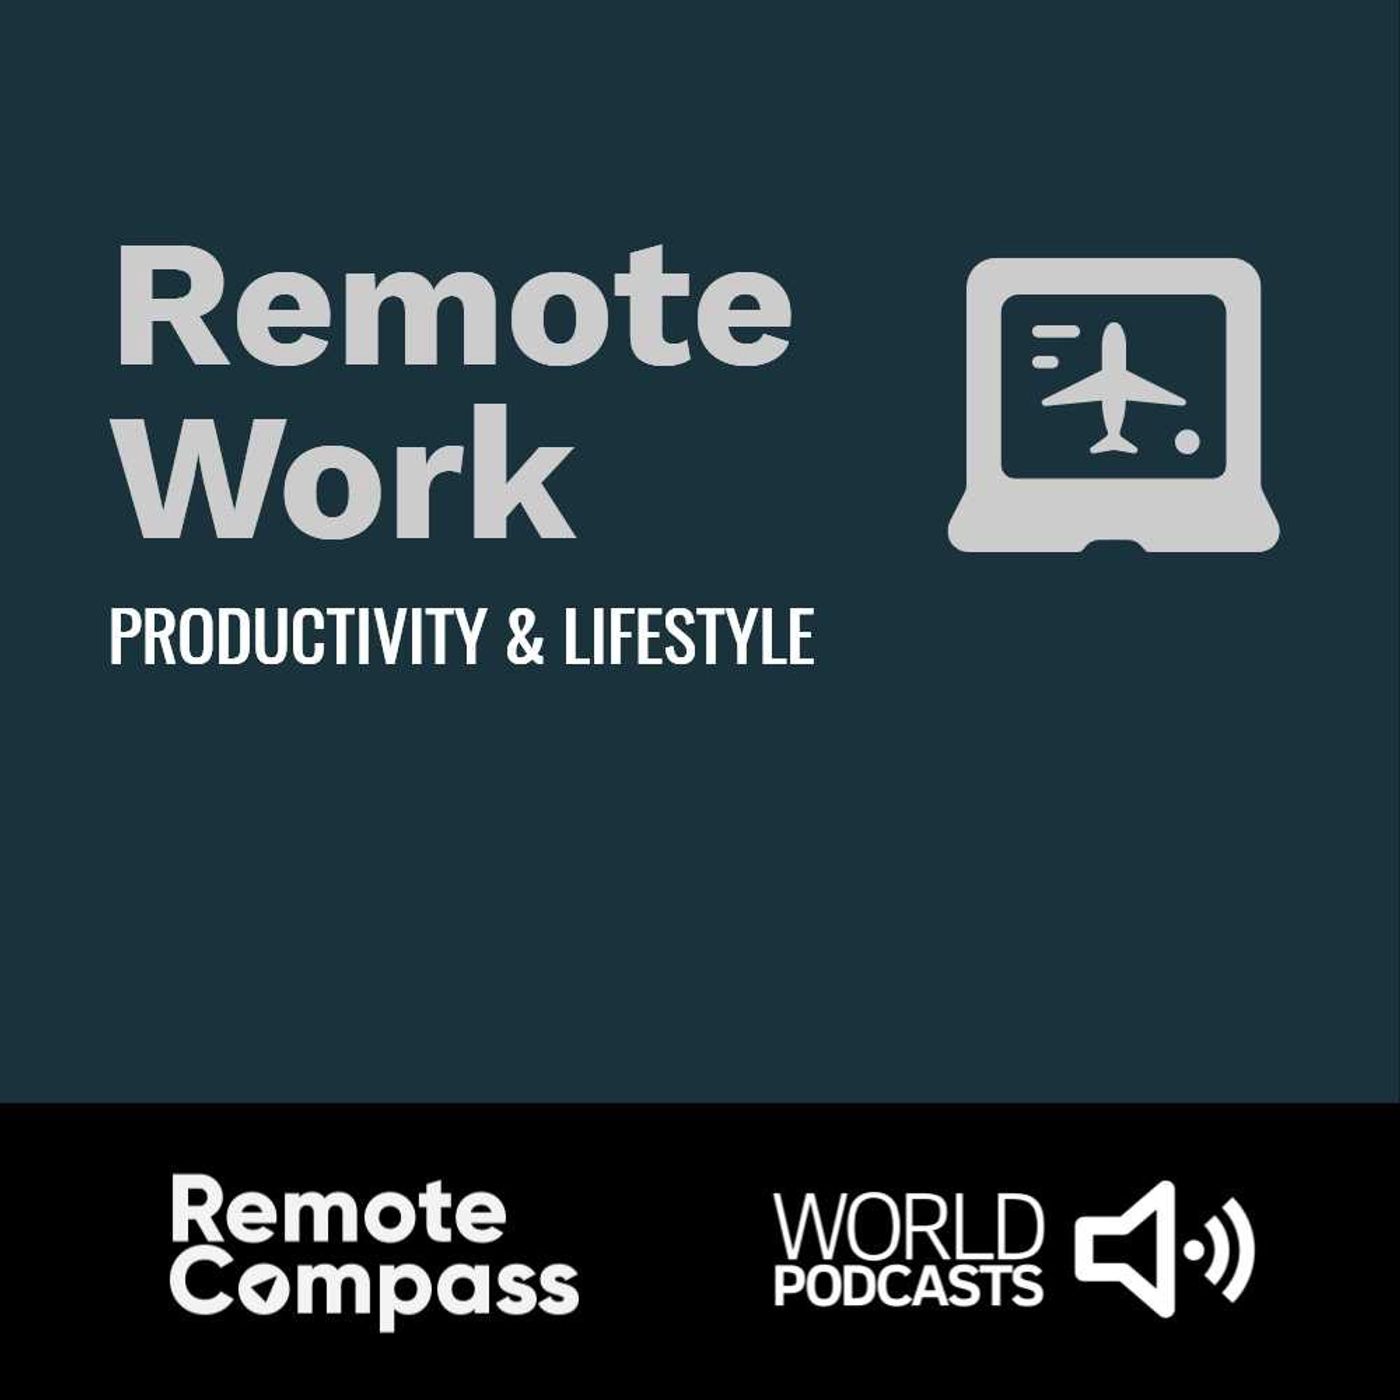 Remote Work Productivity & Lifestyle